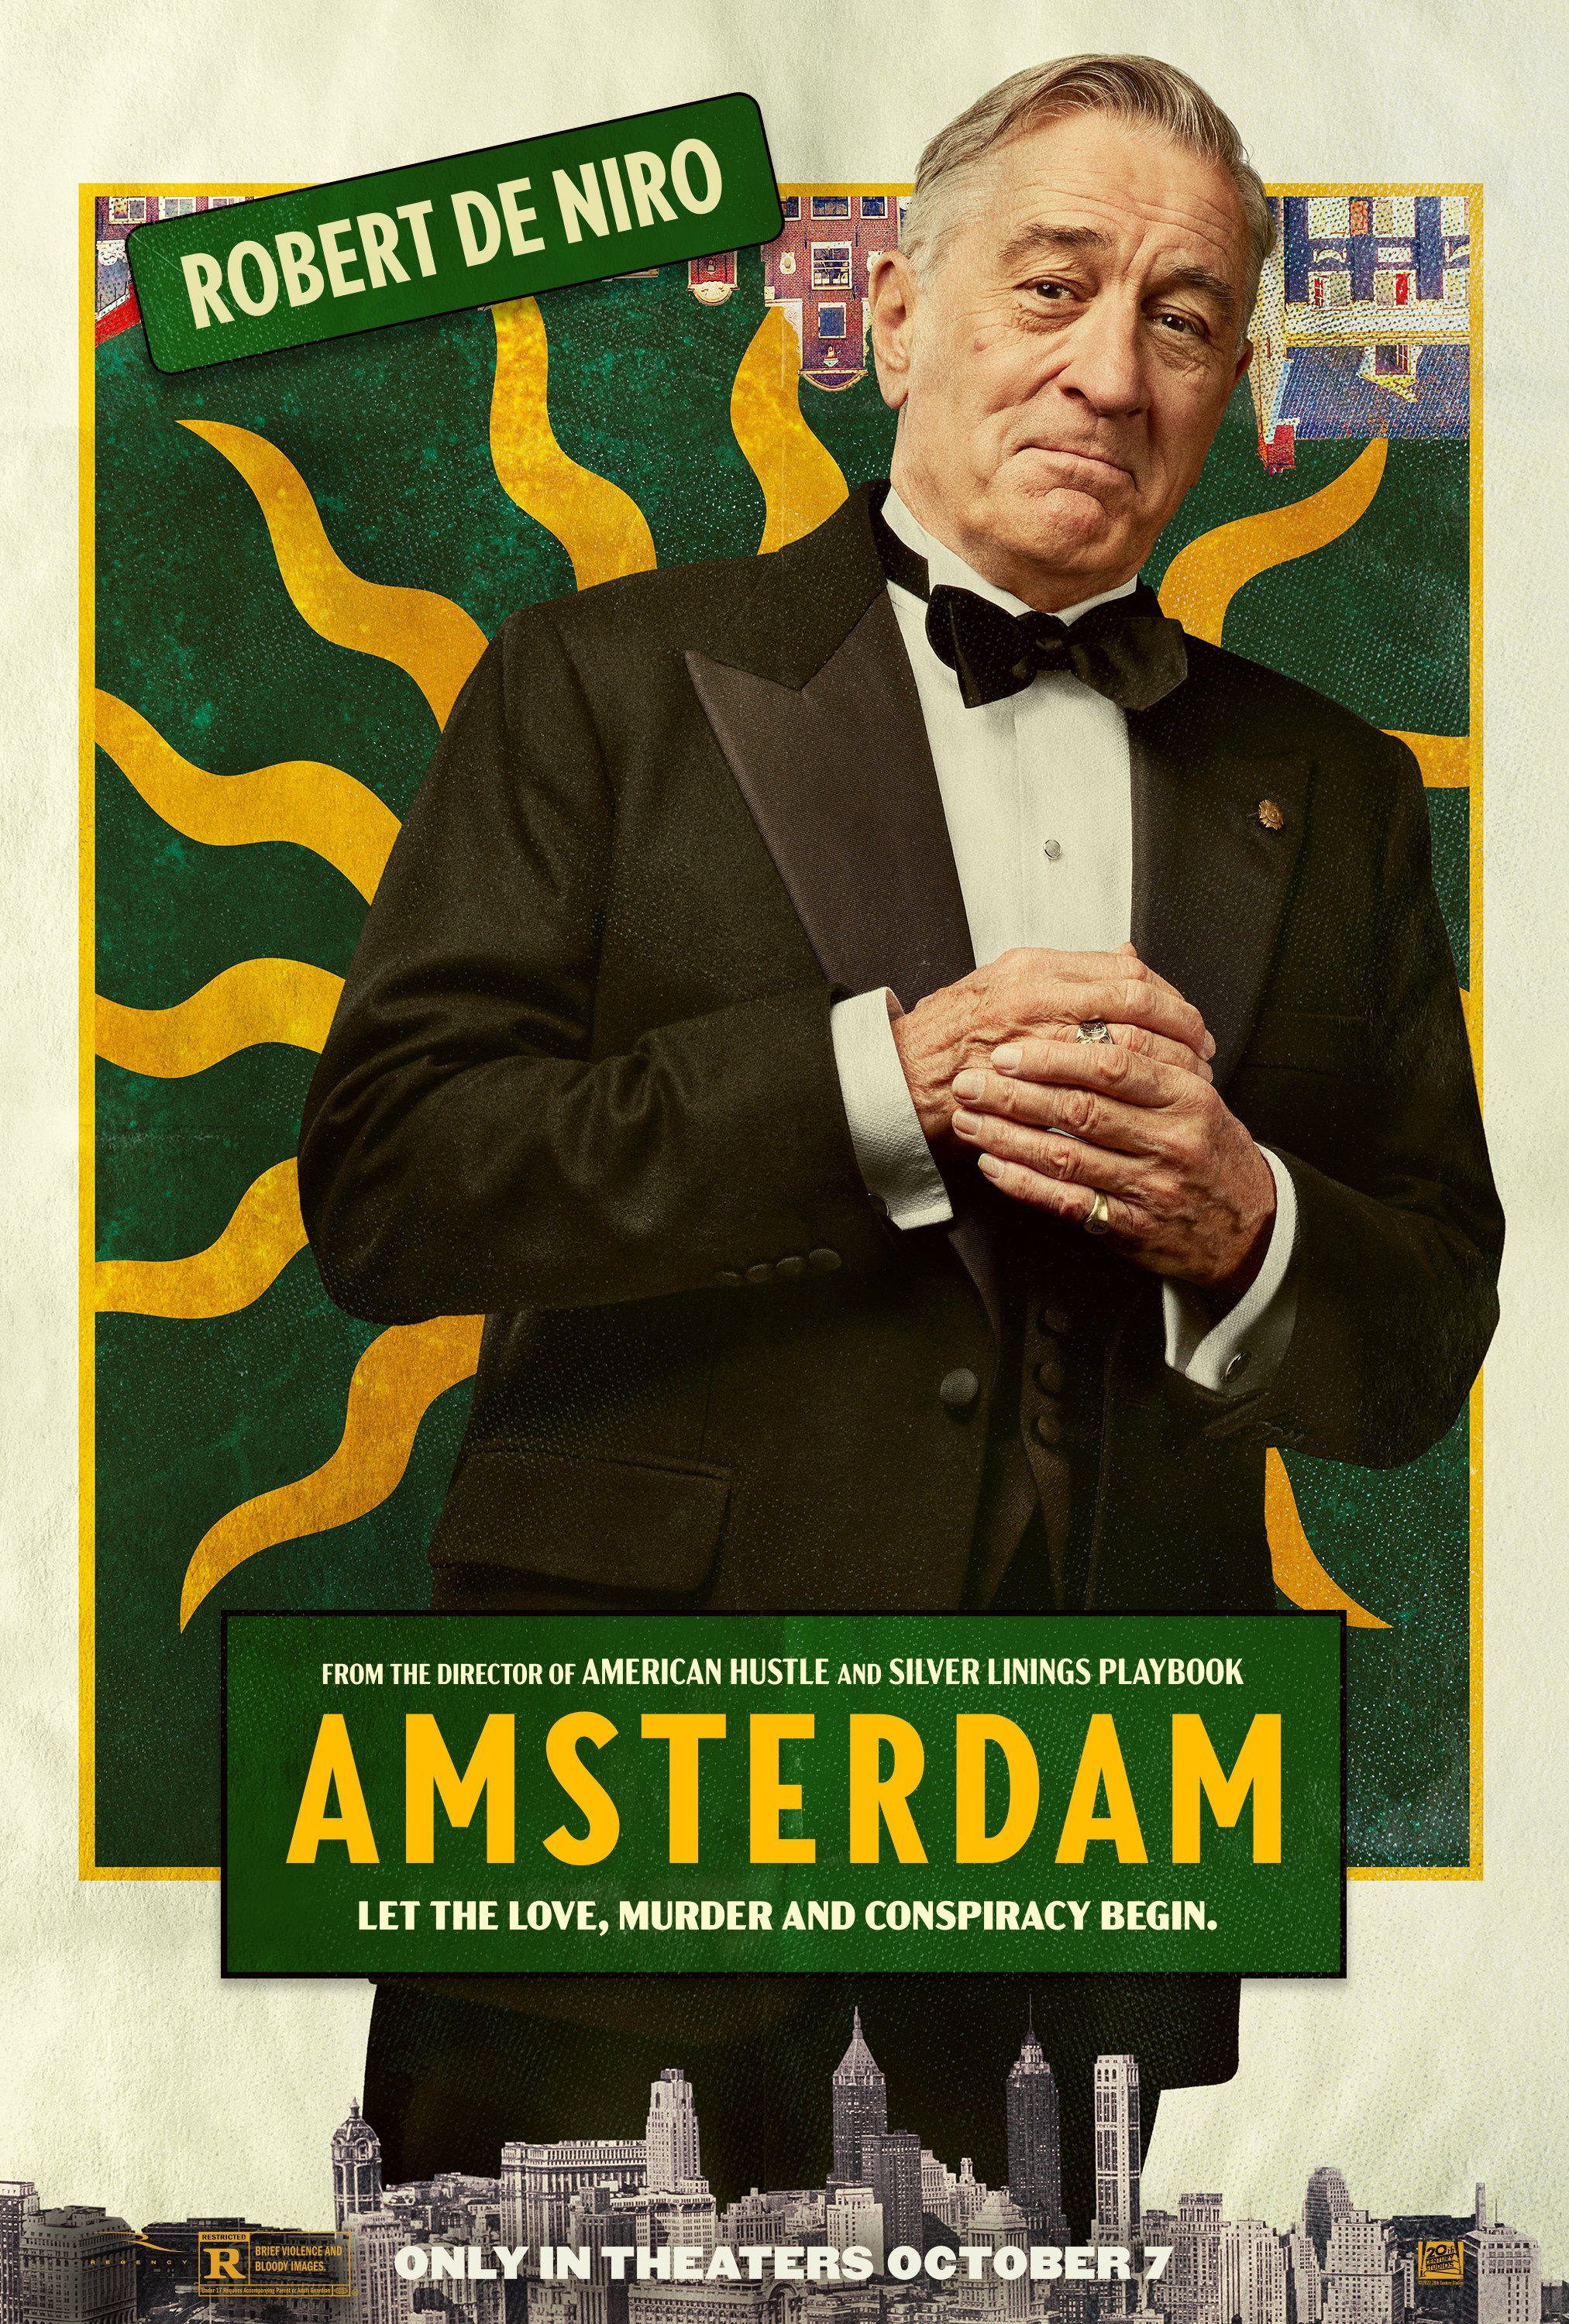 Robert de Niro in Amsterdam poster